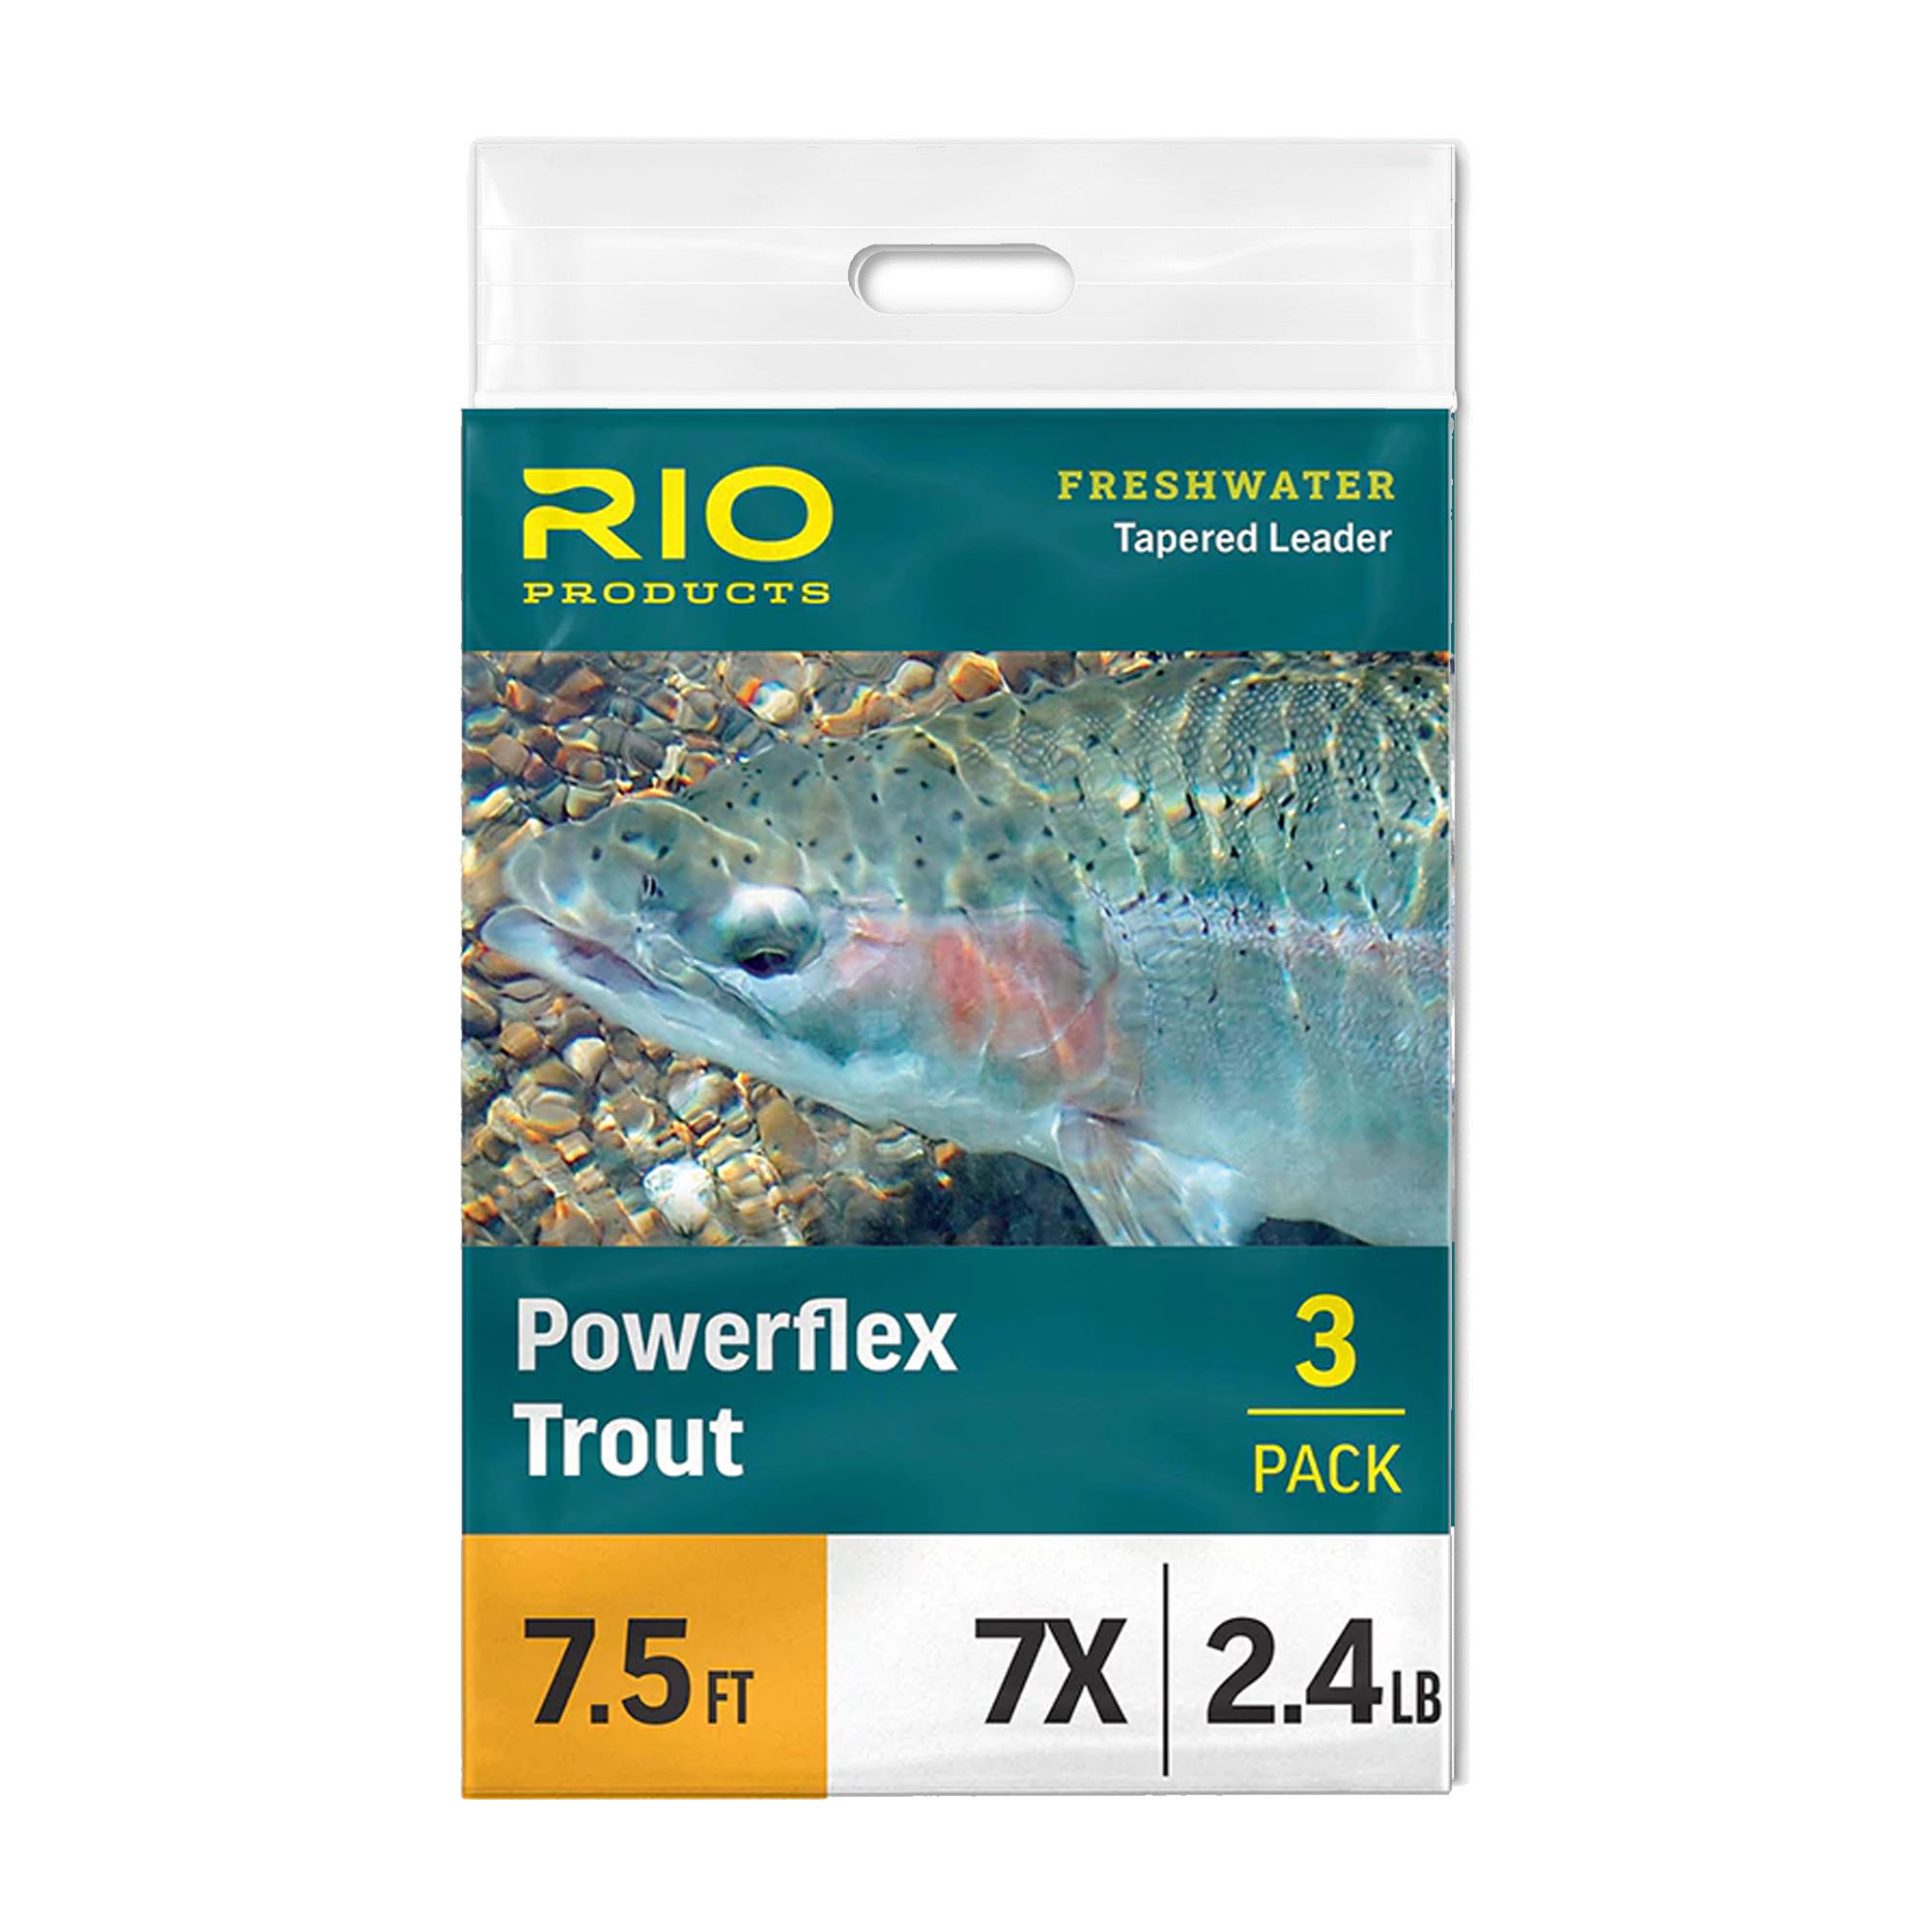 RIO Powerflex Trout Leader – Guide Flyfishing, Fly Fishing Rods, Reels, Sage, Redington, RIO